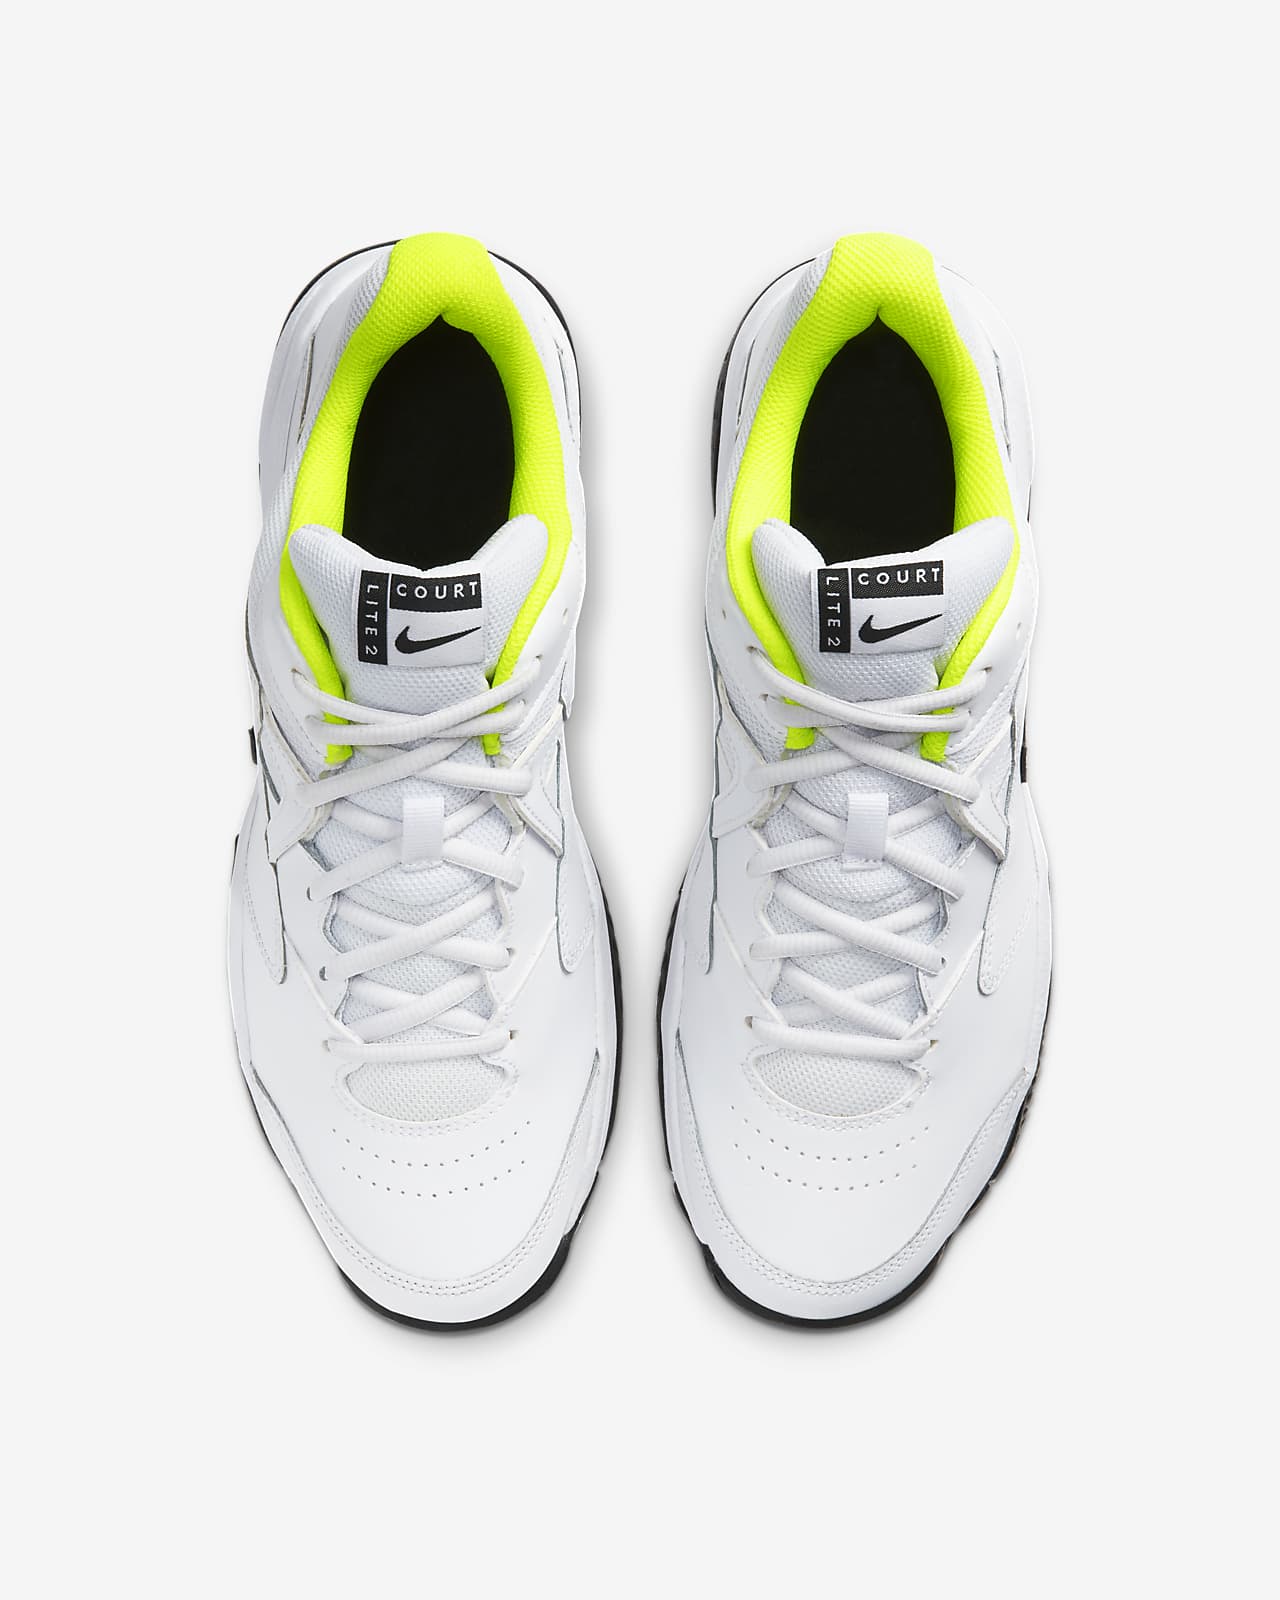 NikeCourt Lite 2 男款硬地球場網球鞋。Nike TW